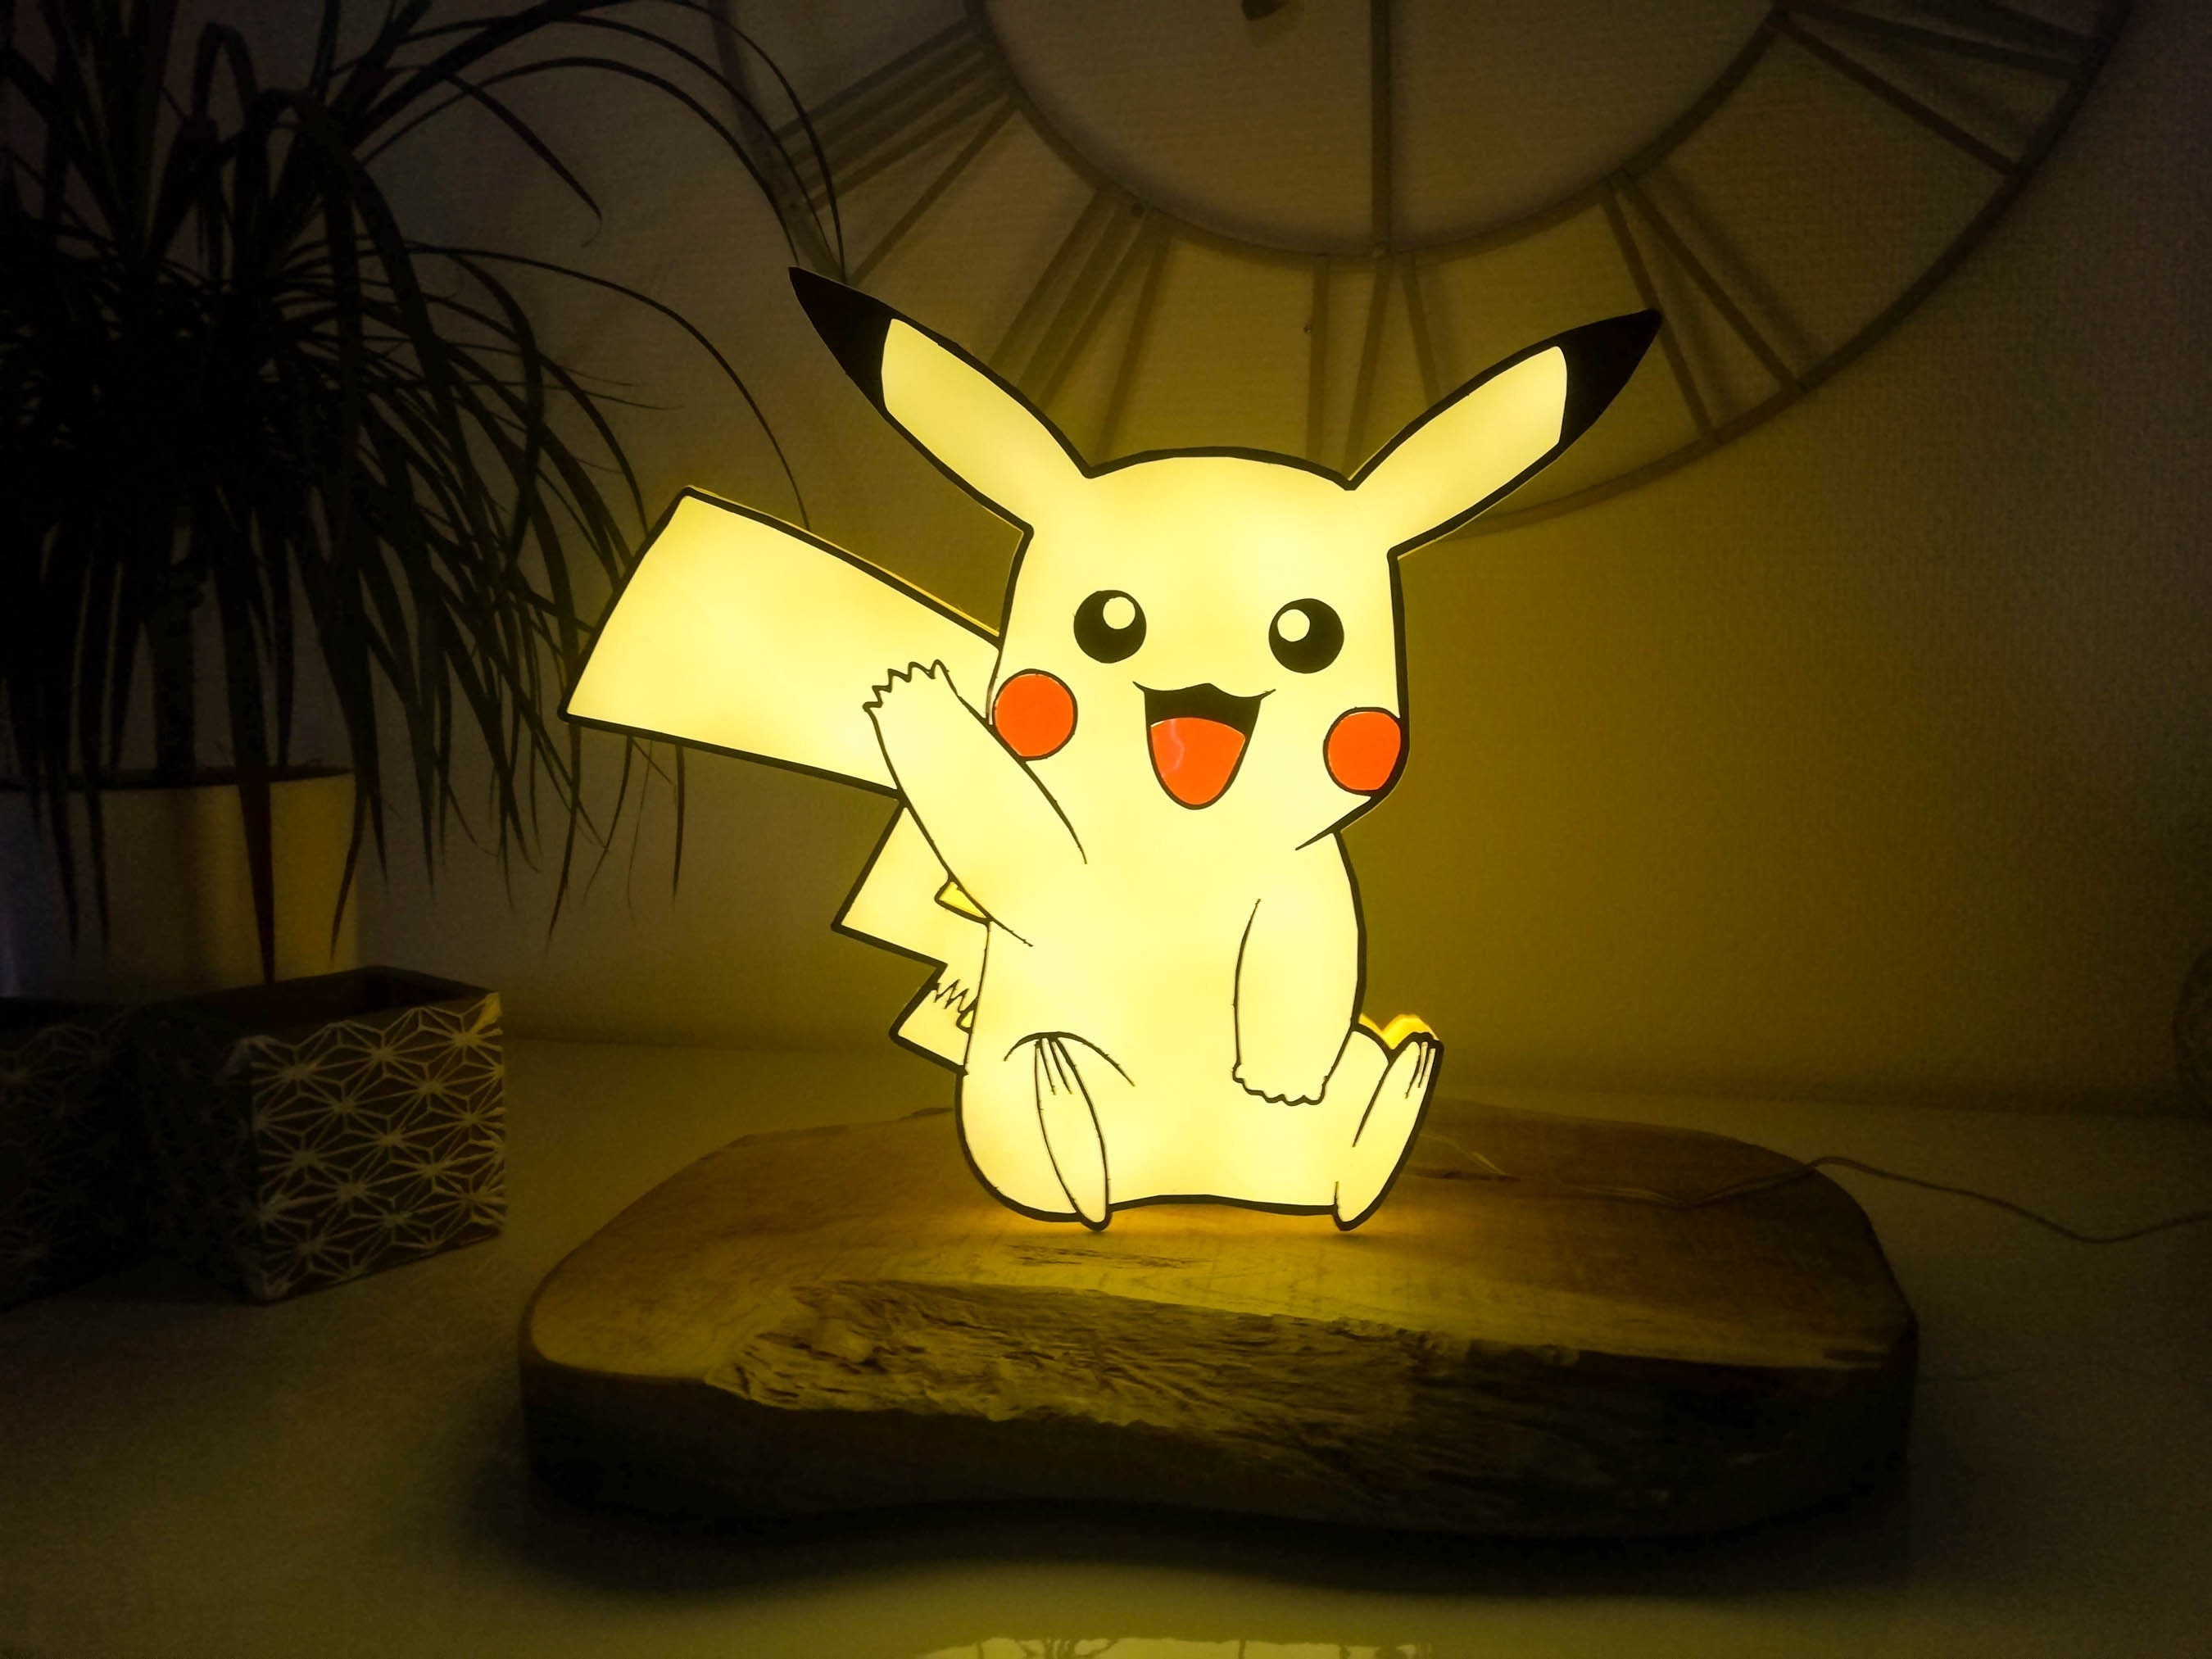 Figurine Lumineuse Pokemon Pikachu - Boutique Pokemon